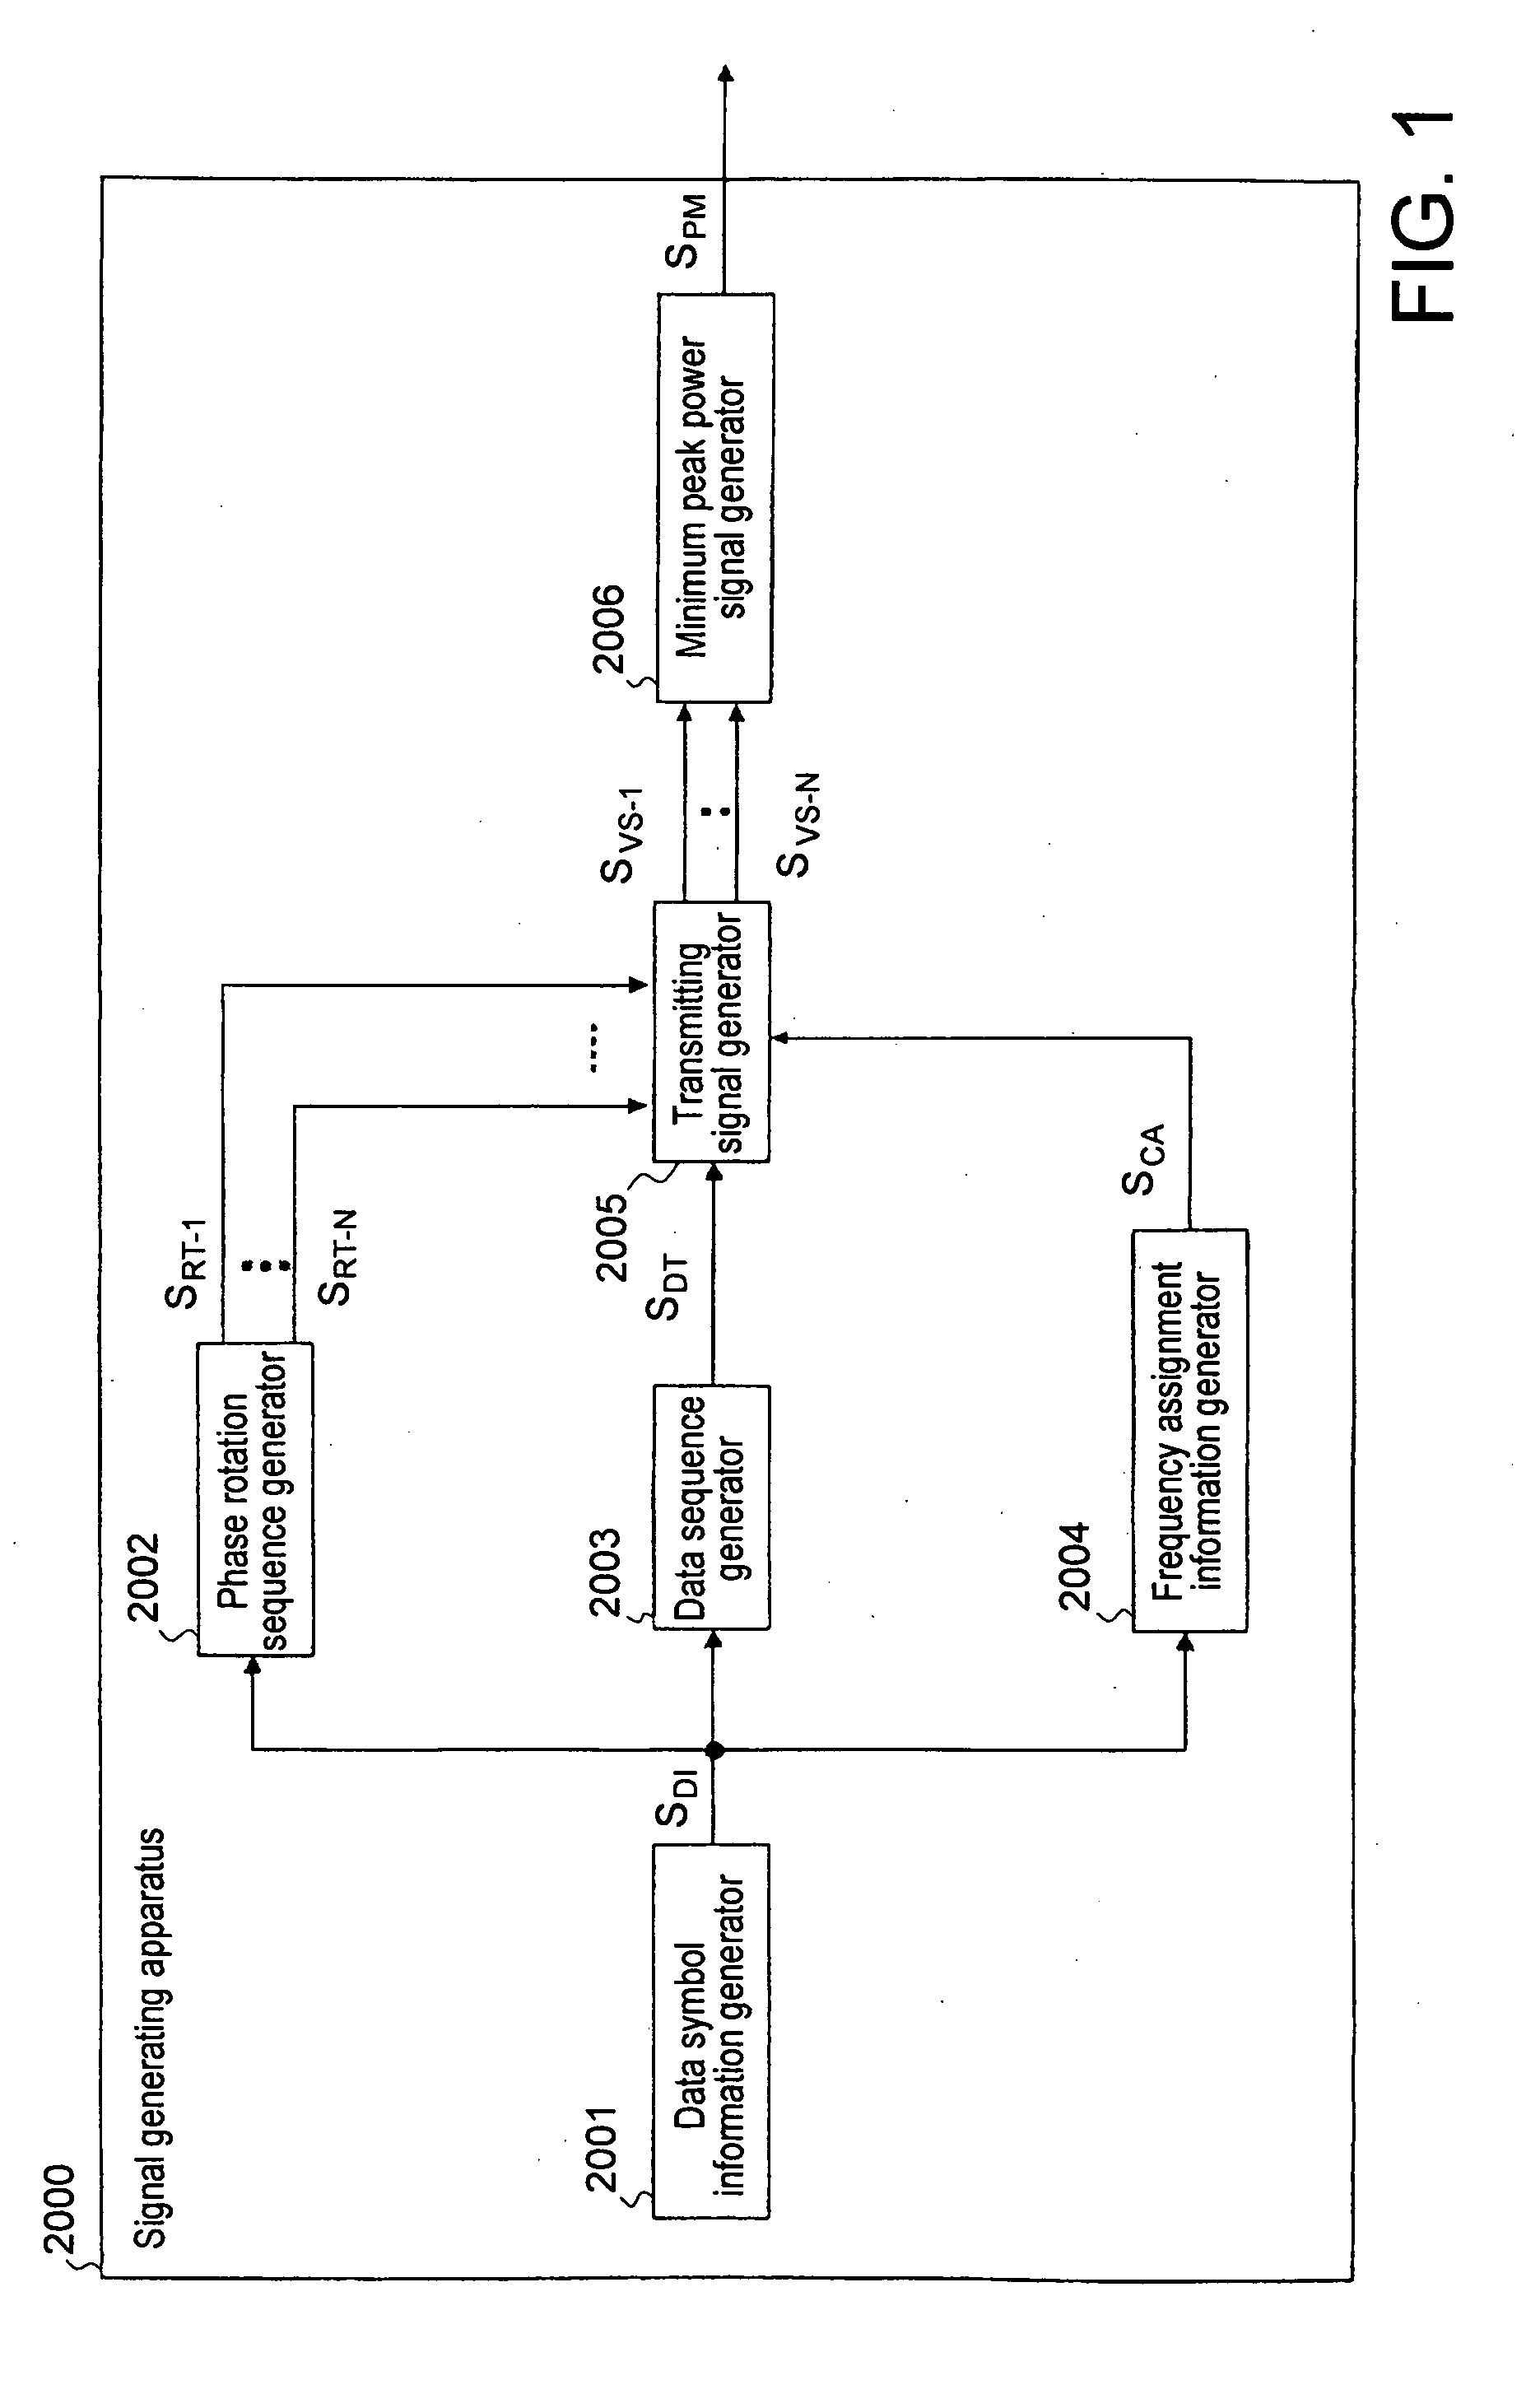 Signal Generating Apparatus and Signal Generation Method